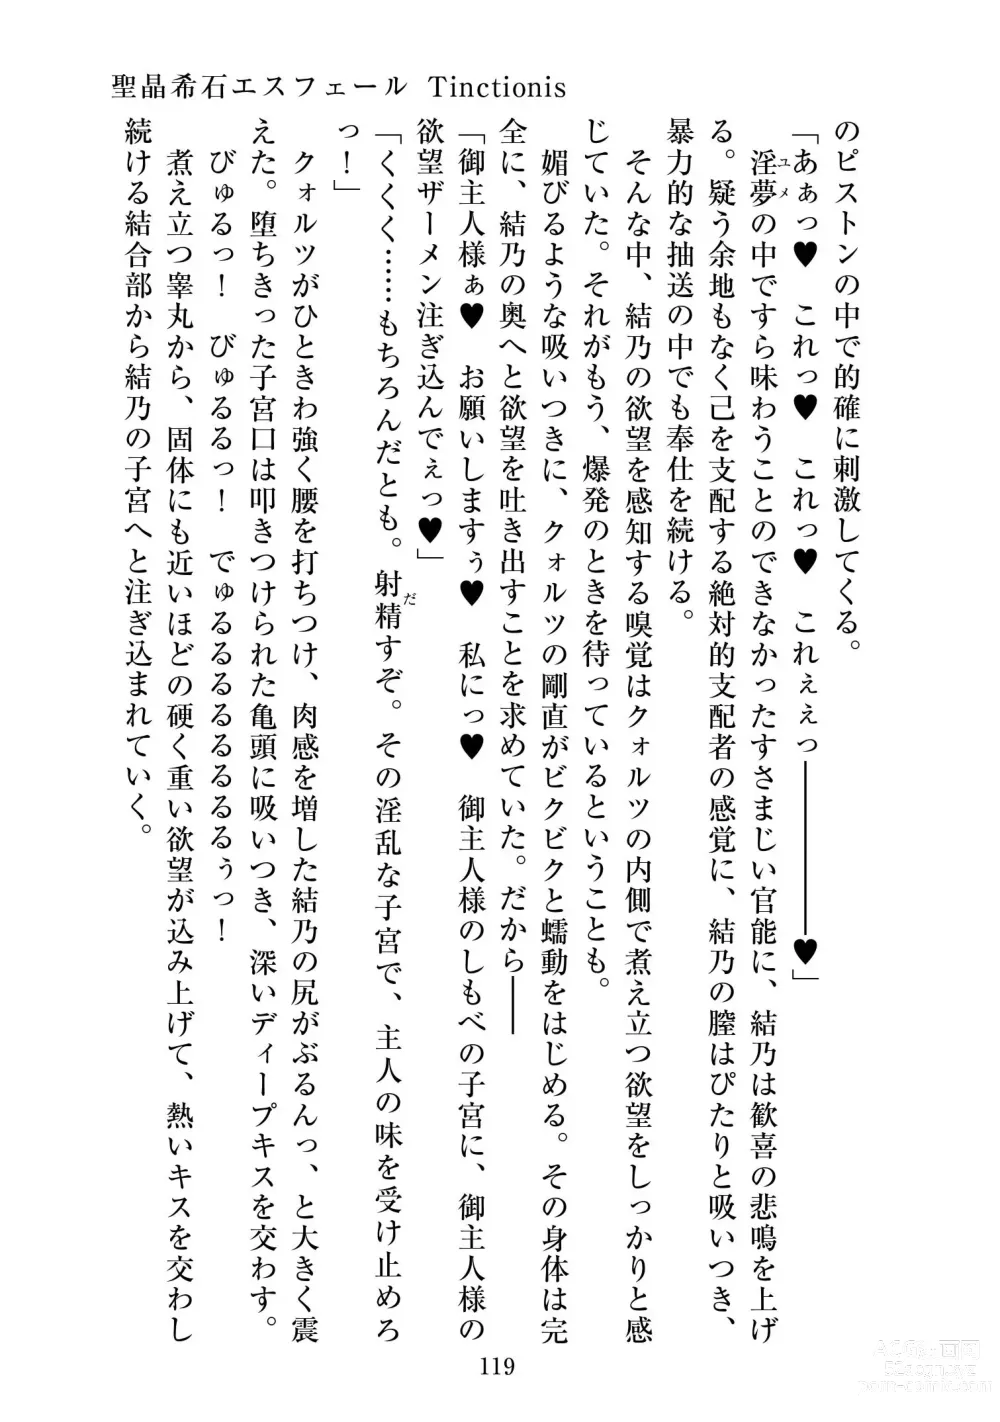 Page 120 of doujinshi Holy Crystal Esphére Tinctionis